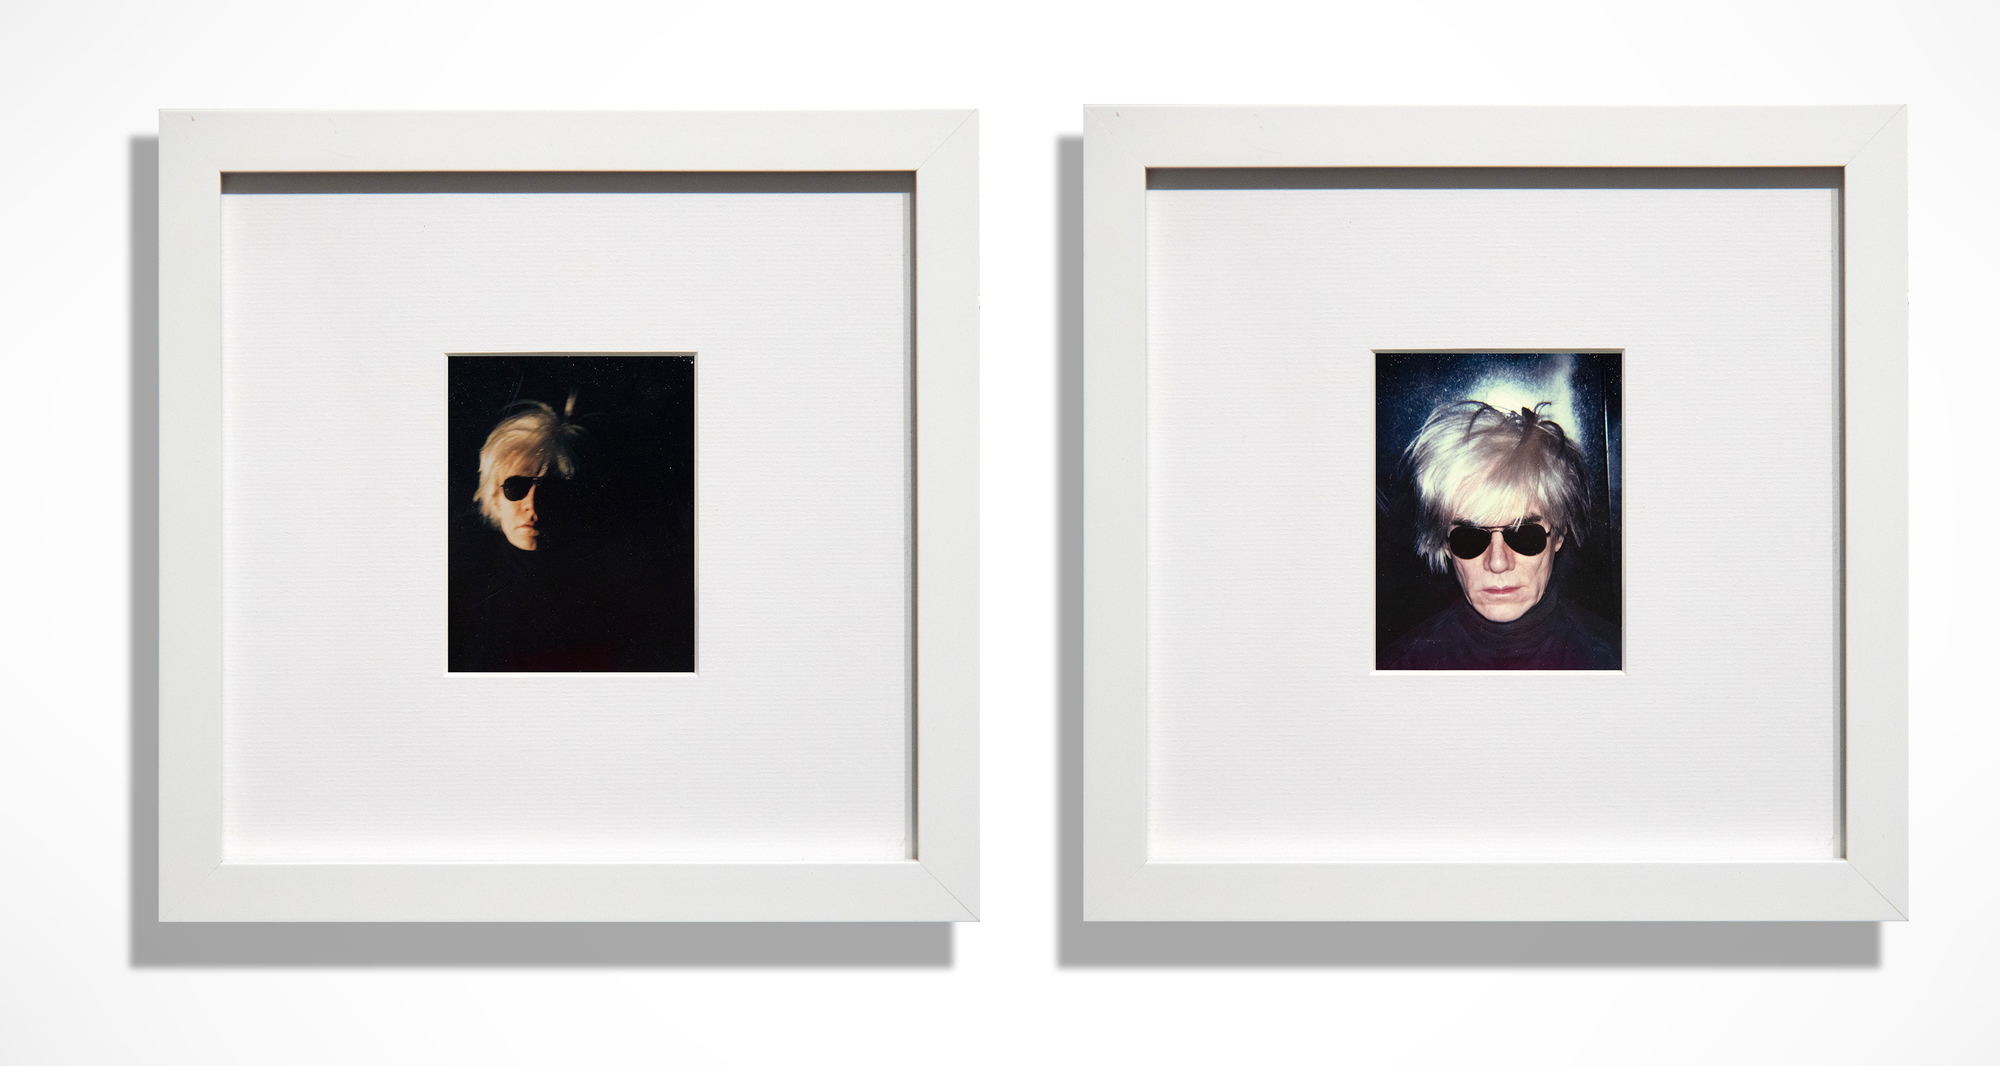 ANDY WARHOL - Self-Portrait in Fright Wig - Polaroid, Polacolor - 4 1/4 x 3 3/8 in. ea.